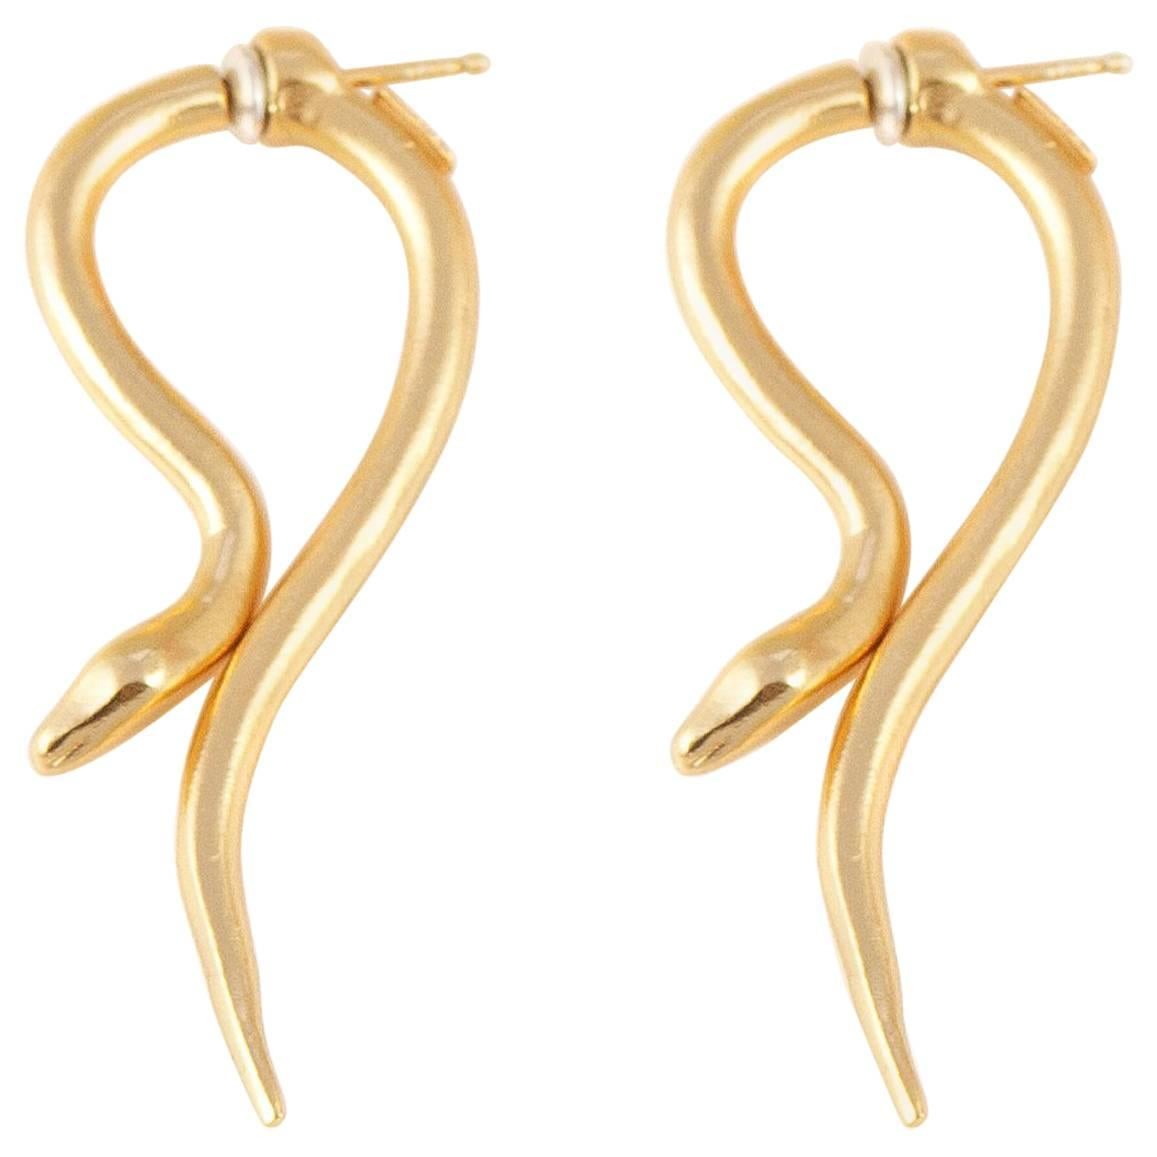 Giulia Barela Hooked earrings, gold plated bronze